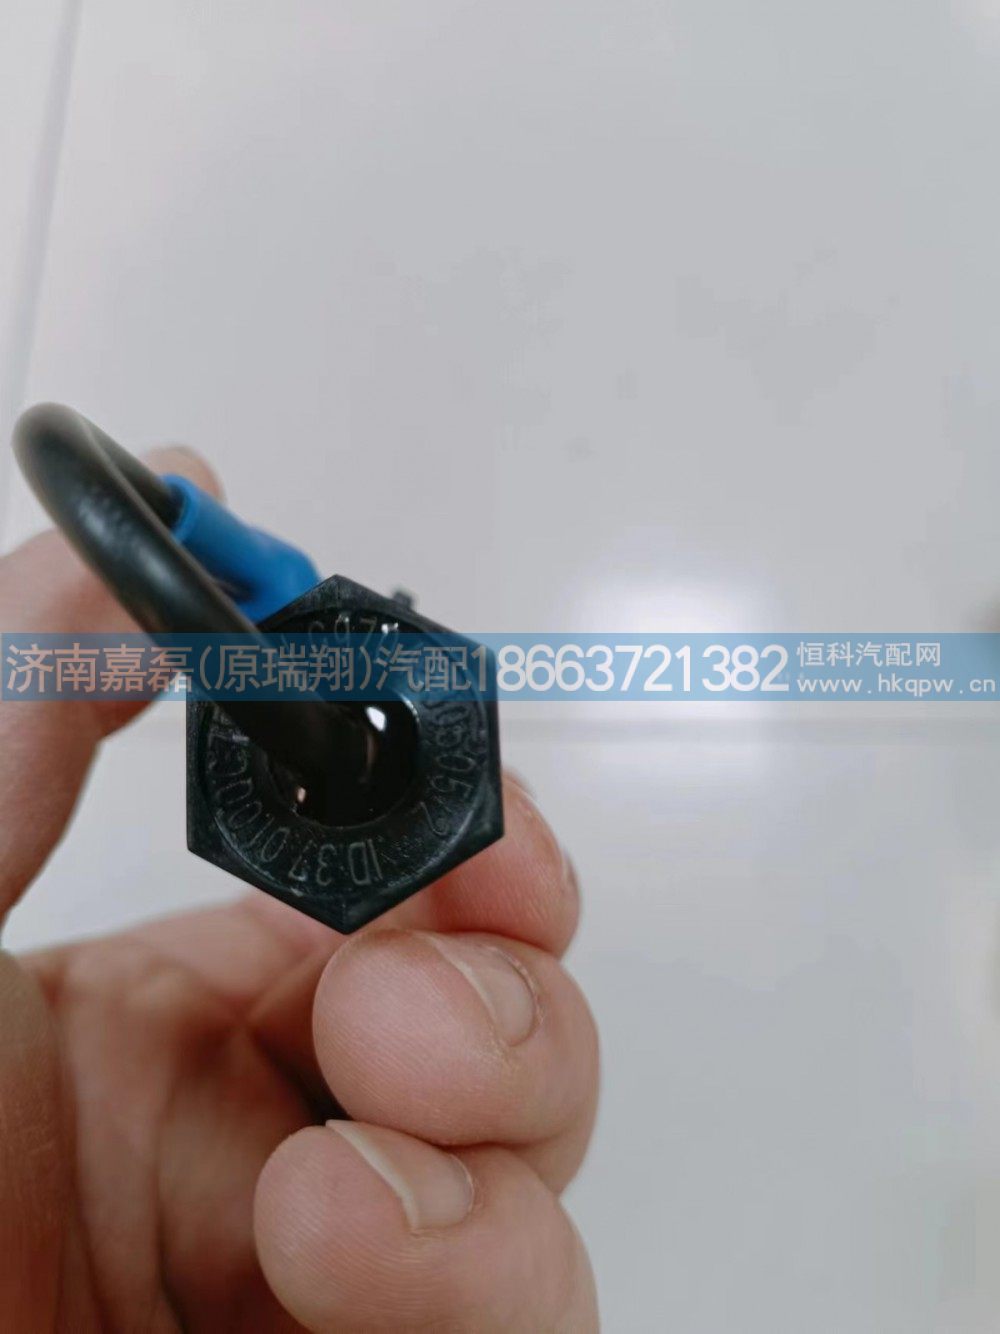 LG9704530505,液位传感器,济南嘉磊汽车配件有限公司(原济南瑞翔)